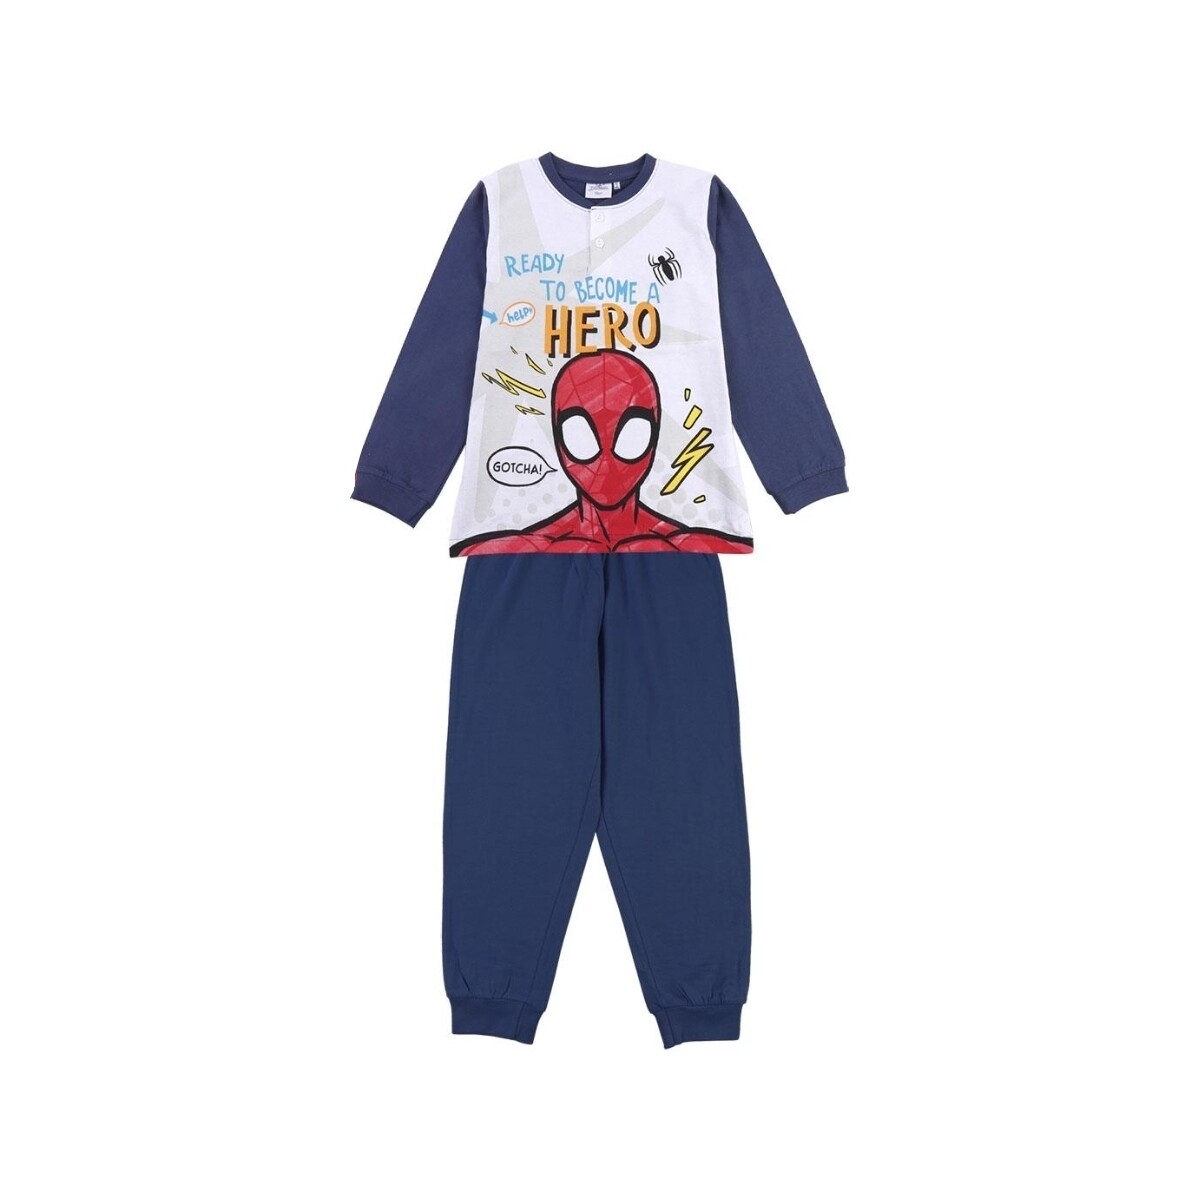 Textil Rapaz Pijamas / Camisas de dormir Marvel 2900000711B Azul